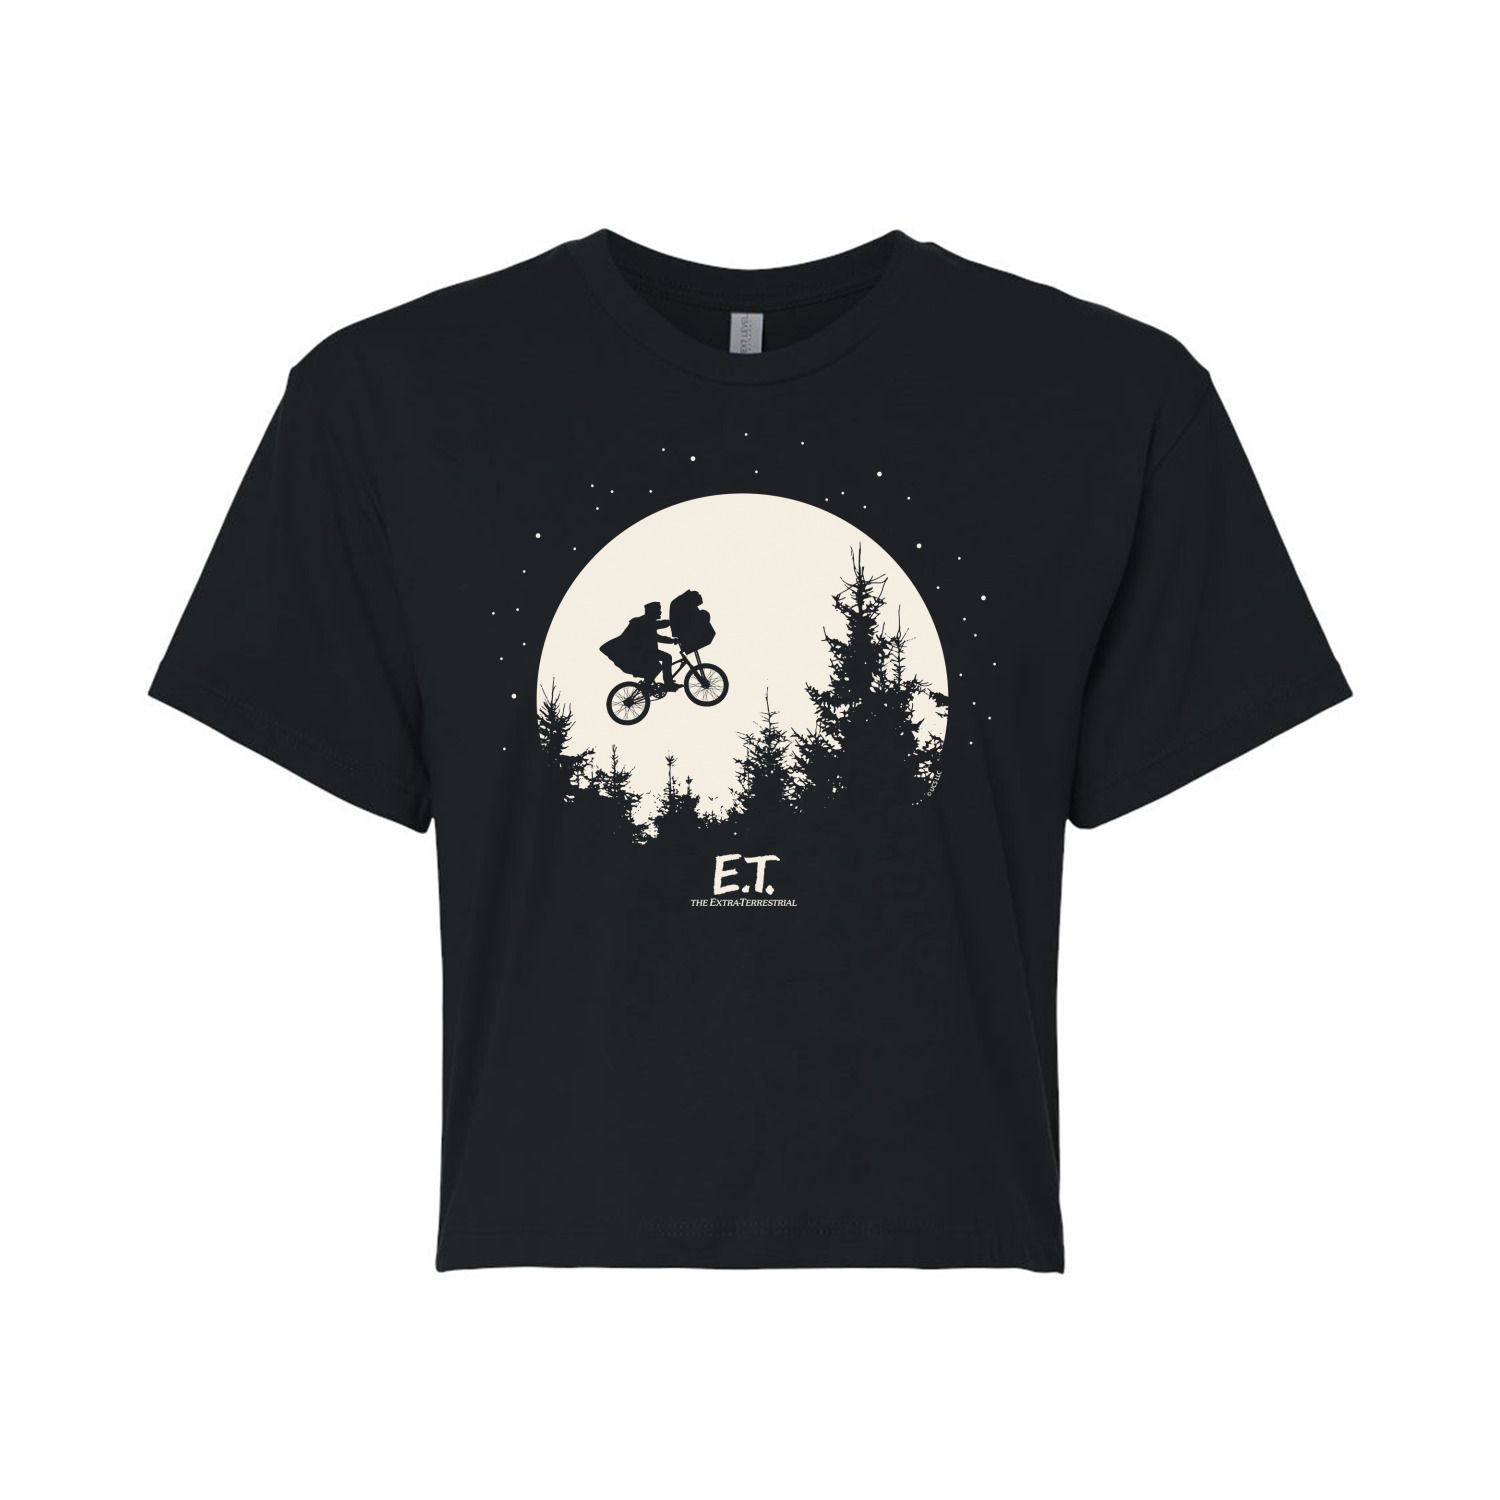 Юниоры E.T. Укороченная футболка с рисунком Bike Moon Licensed Character юниоры e t укороченная футболка с рисунком shine together licensed character белый